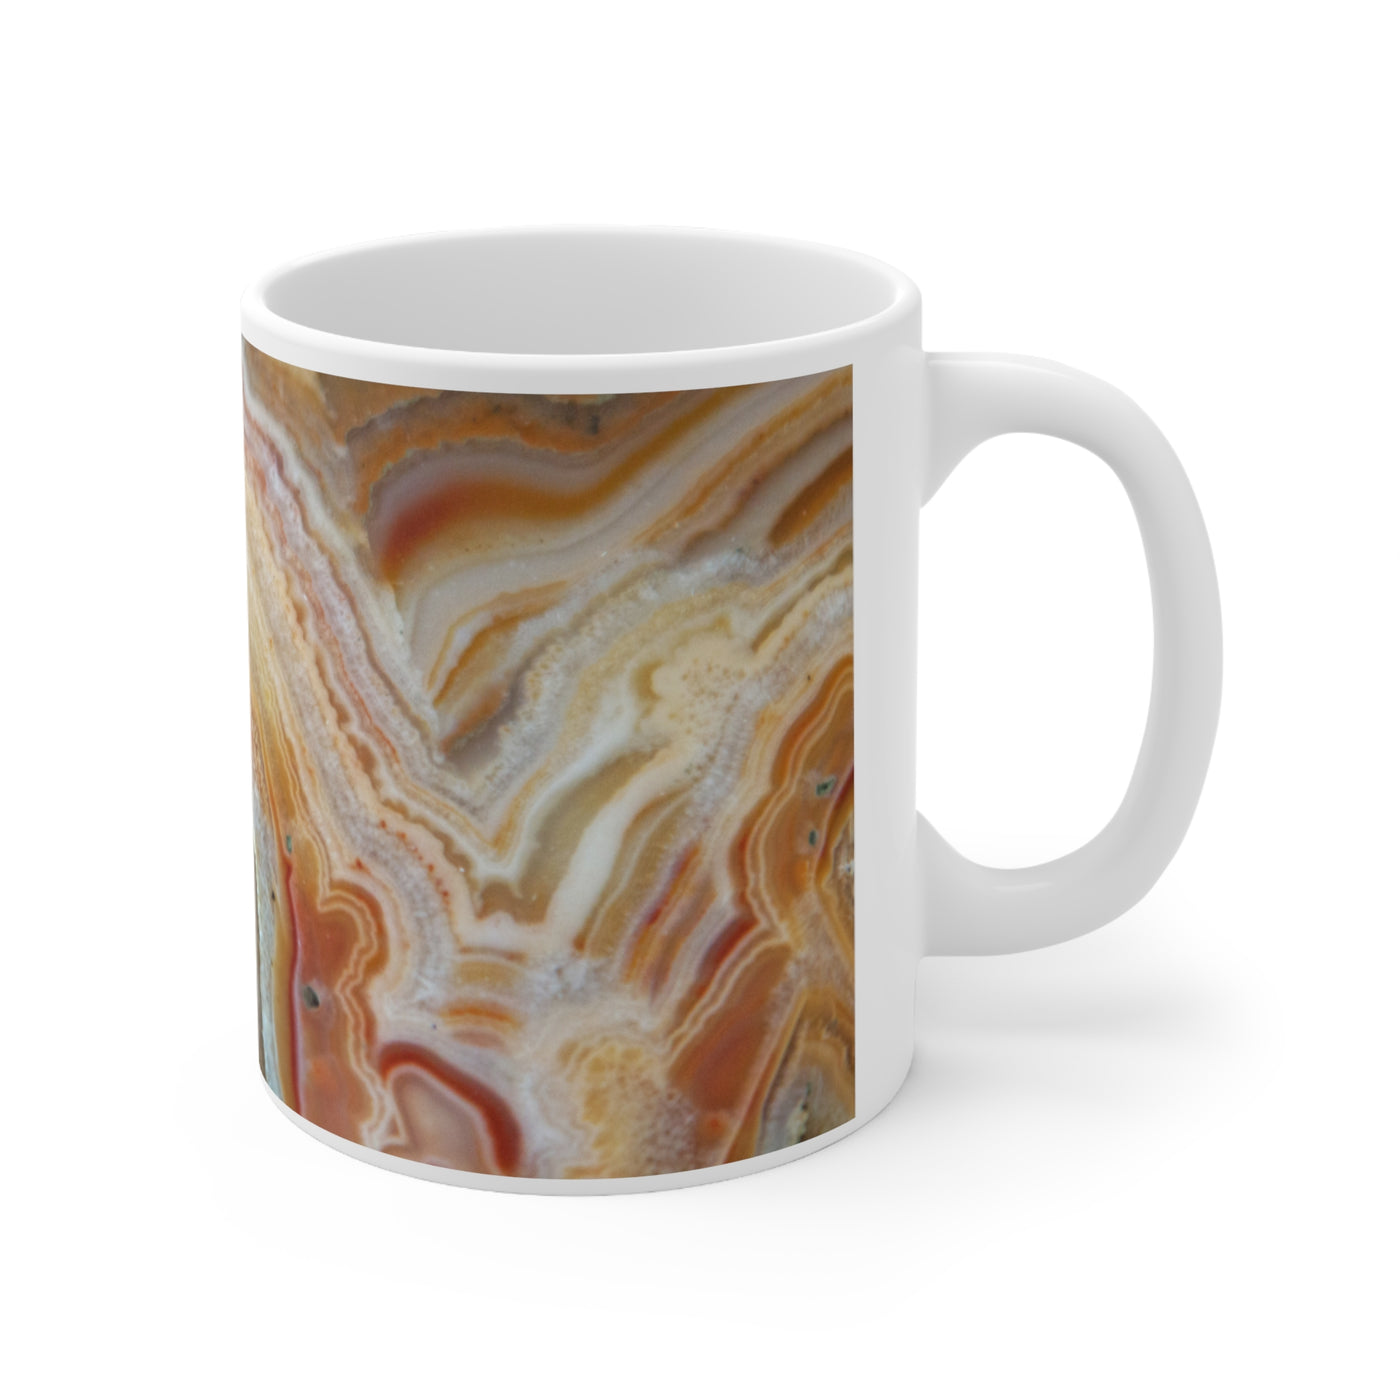 Agate Geode Ceramic Mug Tea Cup for Crystal Collectors, Rockhounds, Gem & Mineral Lovers, Crystal Healing Lovers, Metaphysical Gift 11 oz